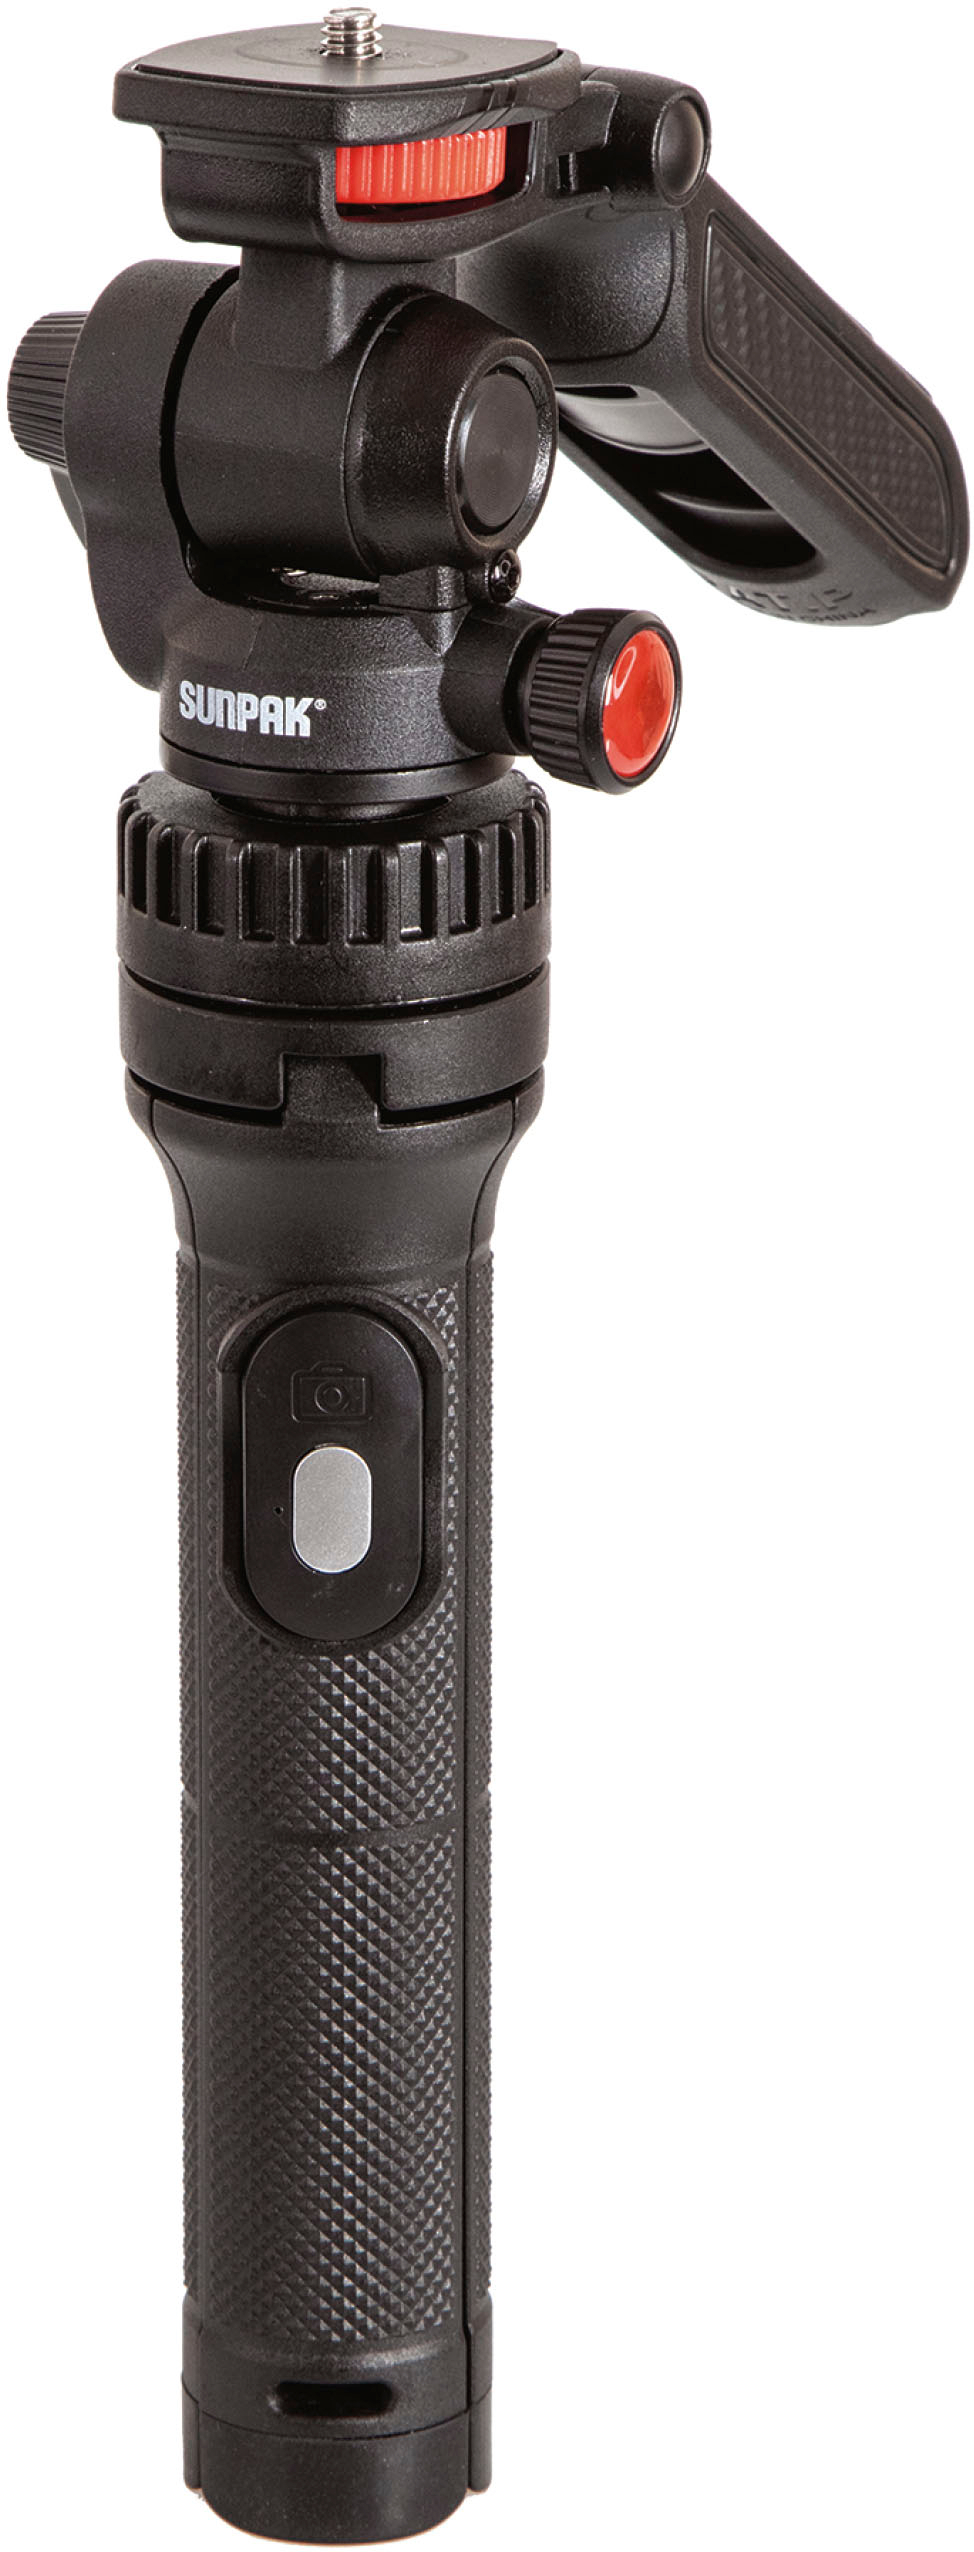 Insta360 114cm Invisible Selfie Stick Black CINSAAVF - Best Buy